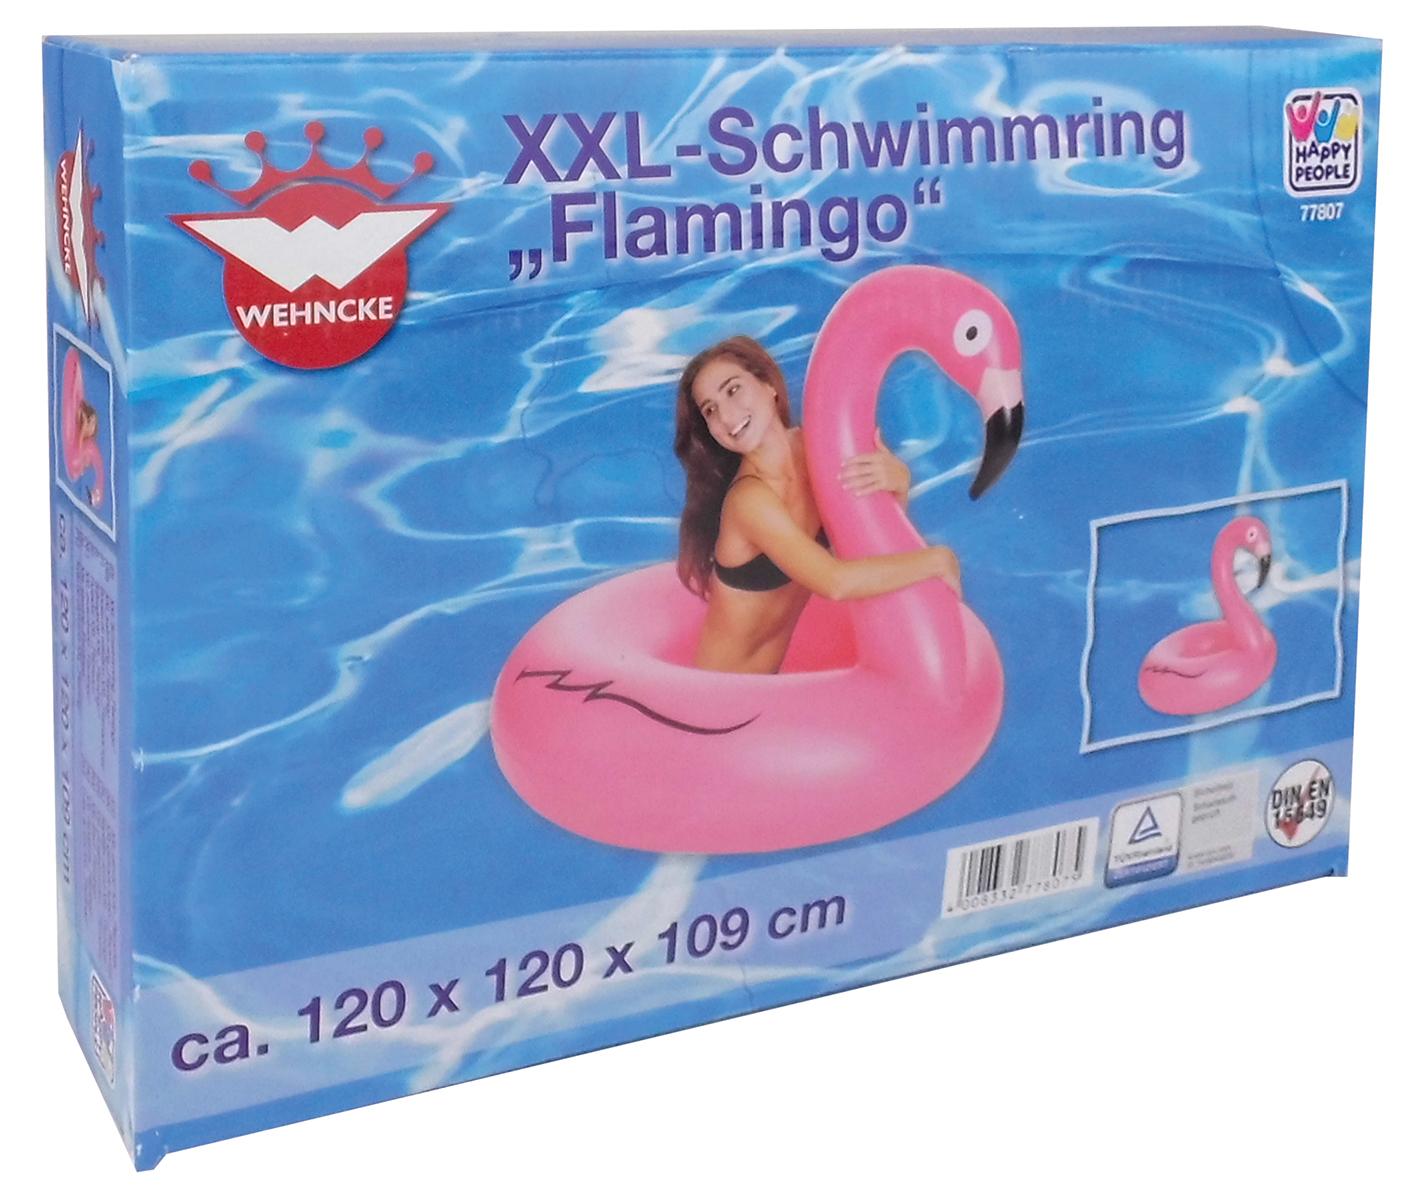 Happy People XXL Schwimmring Flamingo, 120 cm, pink